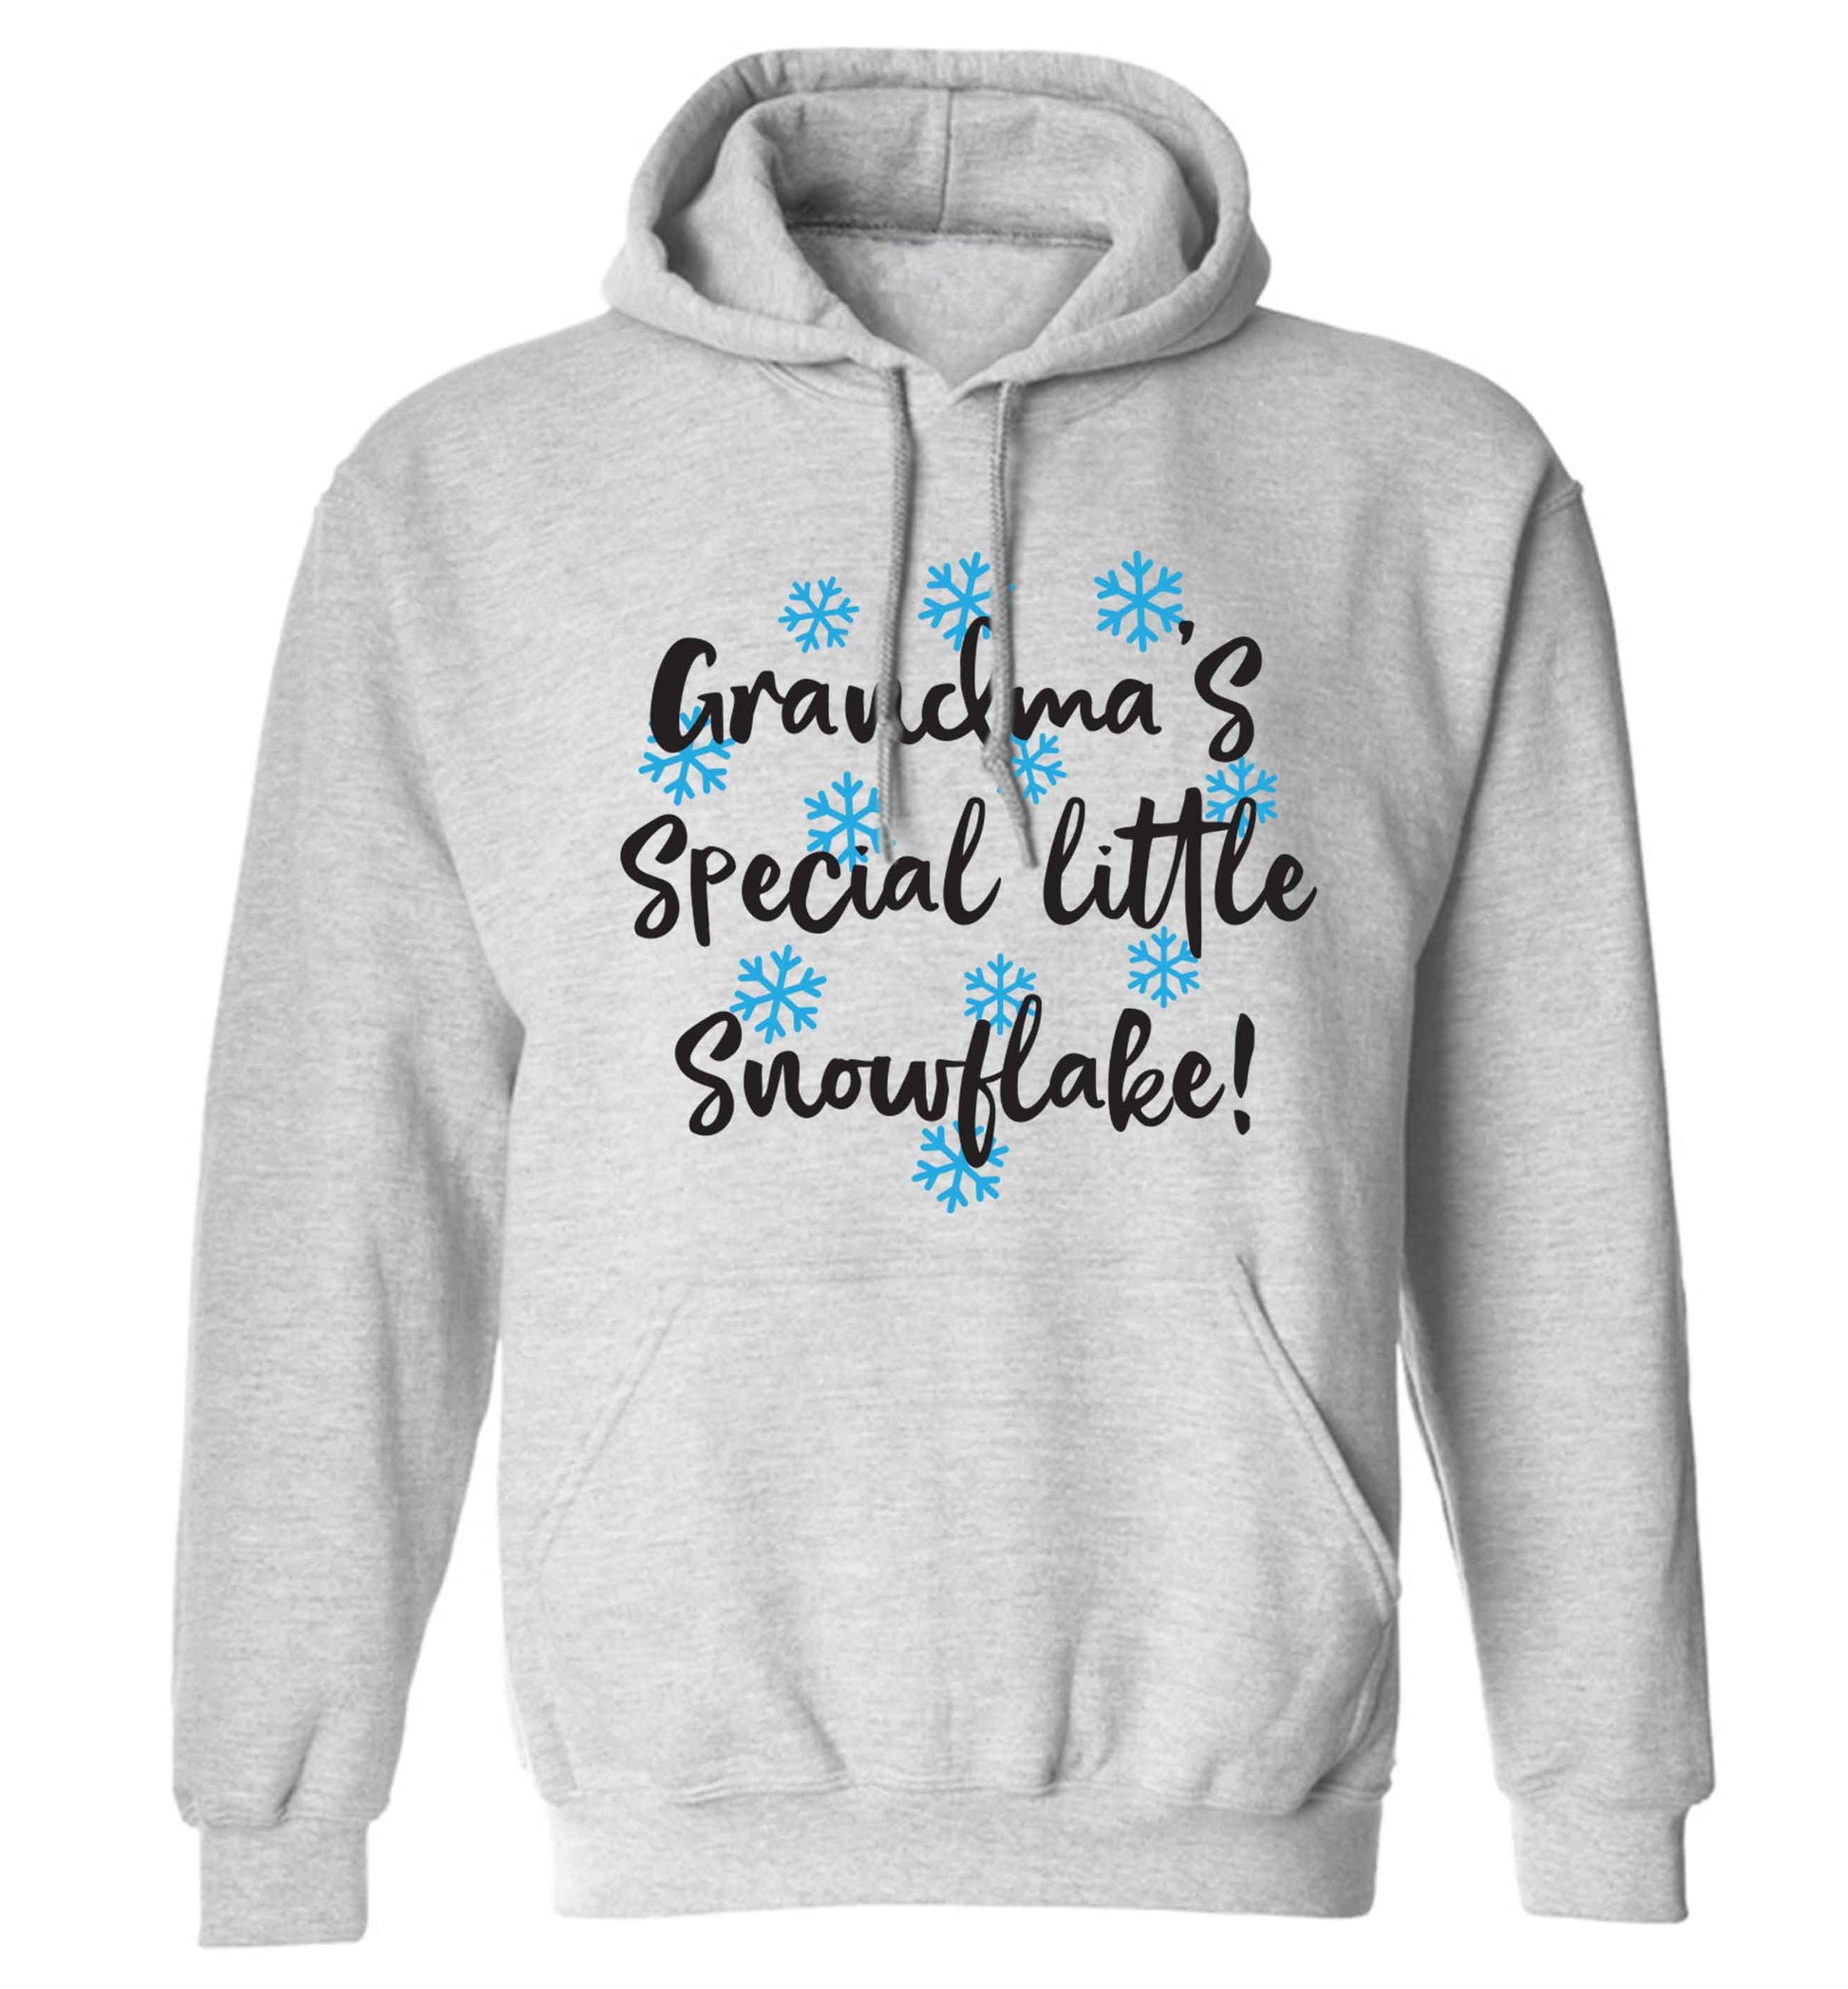 Grandma's special little snowflake adults unisex grey hoodie 2XL